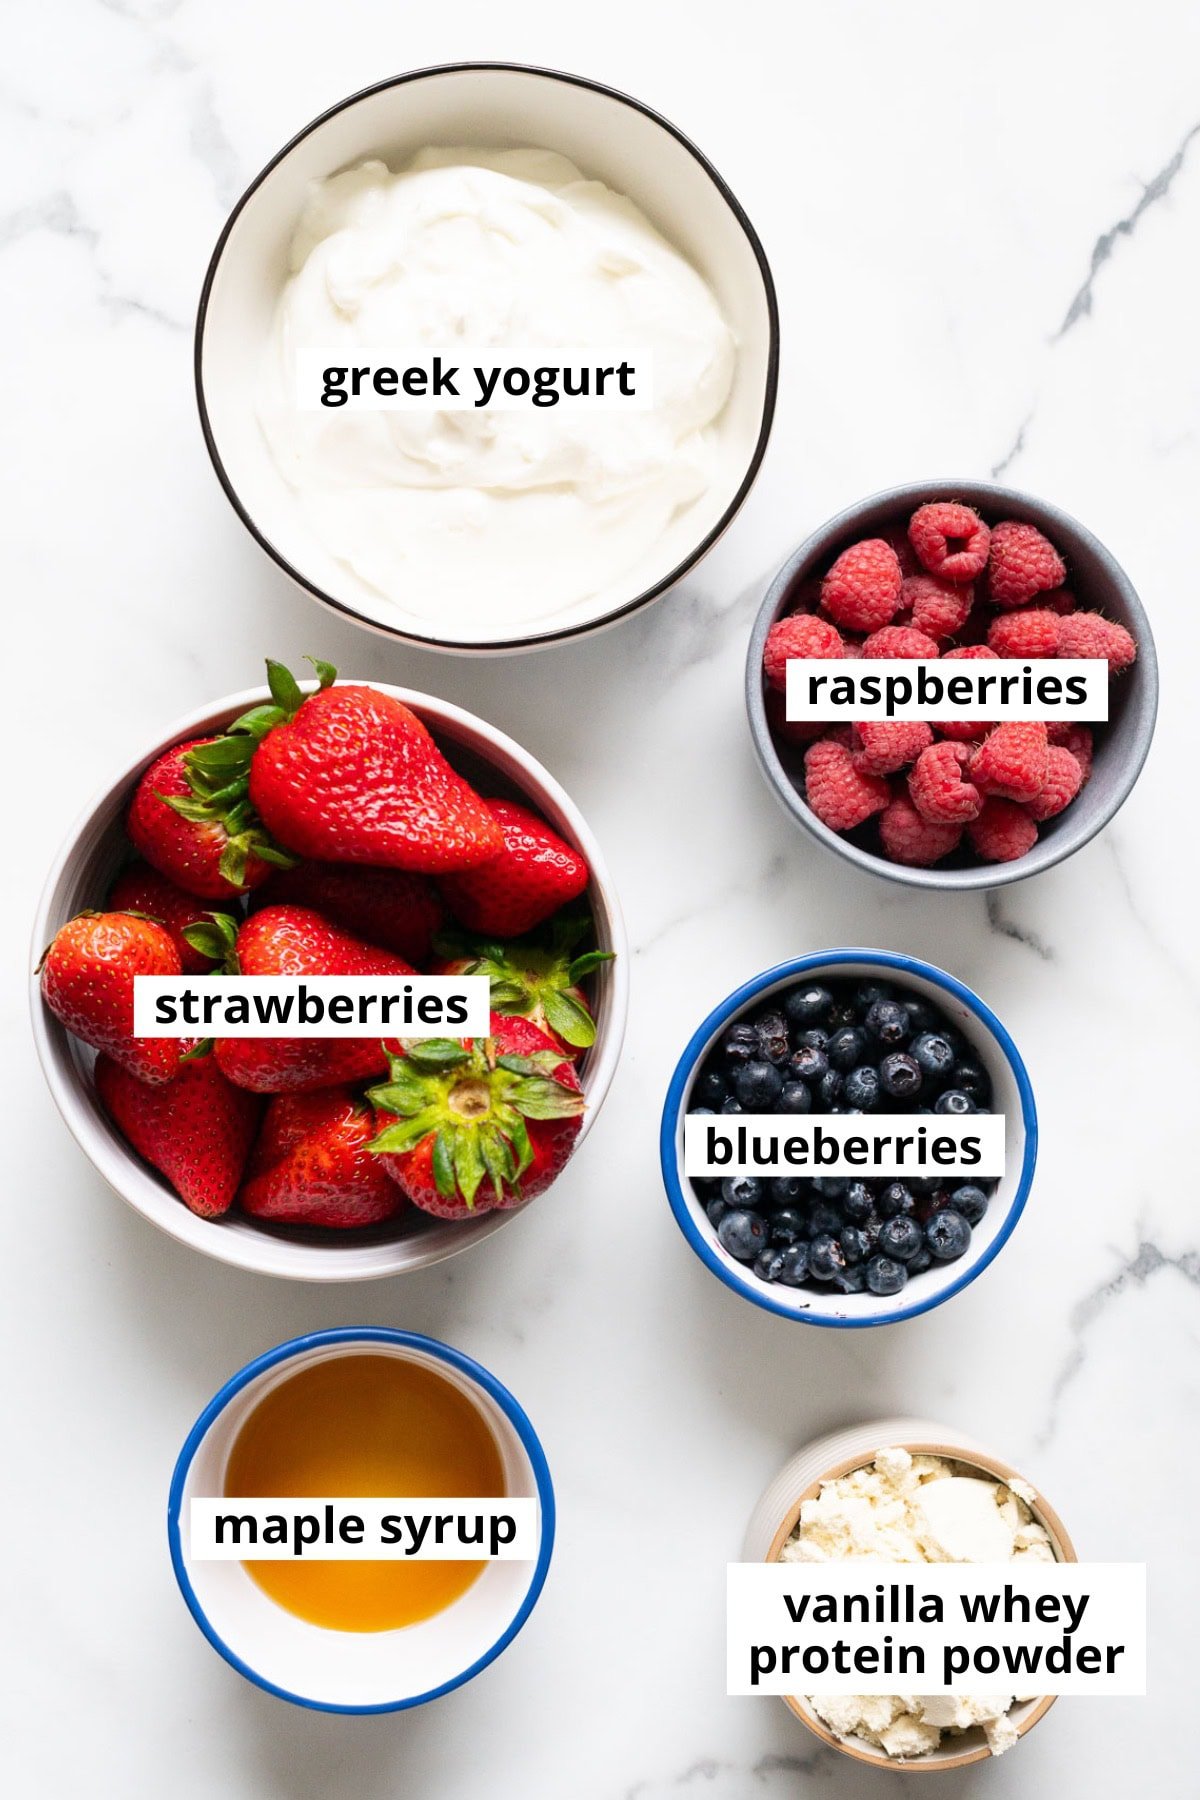 Greek yogurt, raspberries, strawberries, blueberries, maple syrup, vanilla whey protein powder.